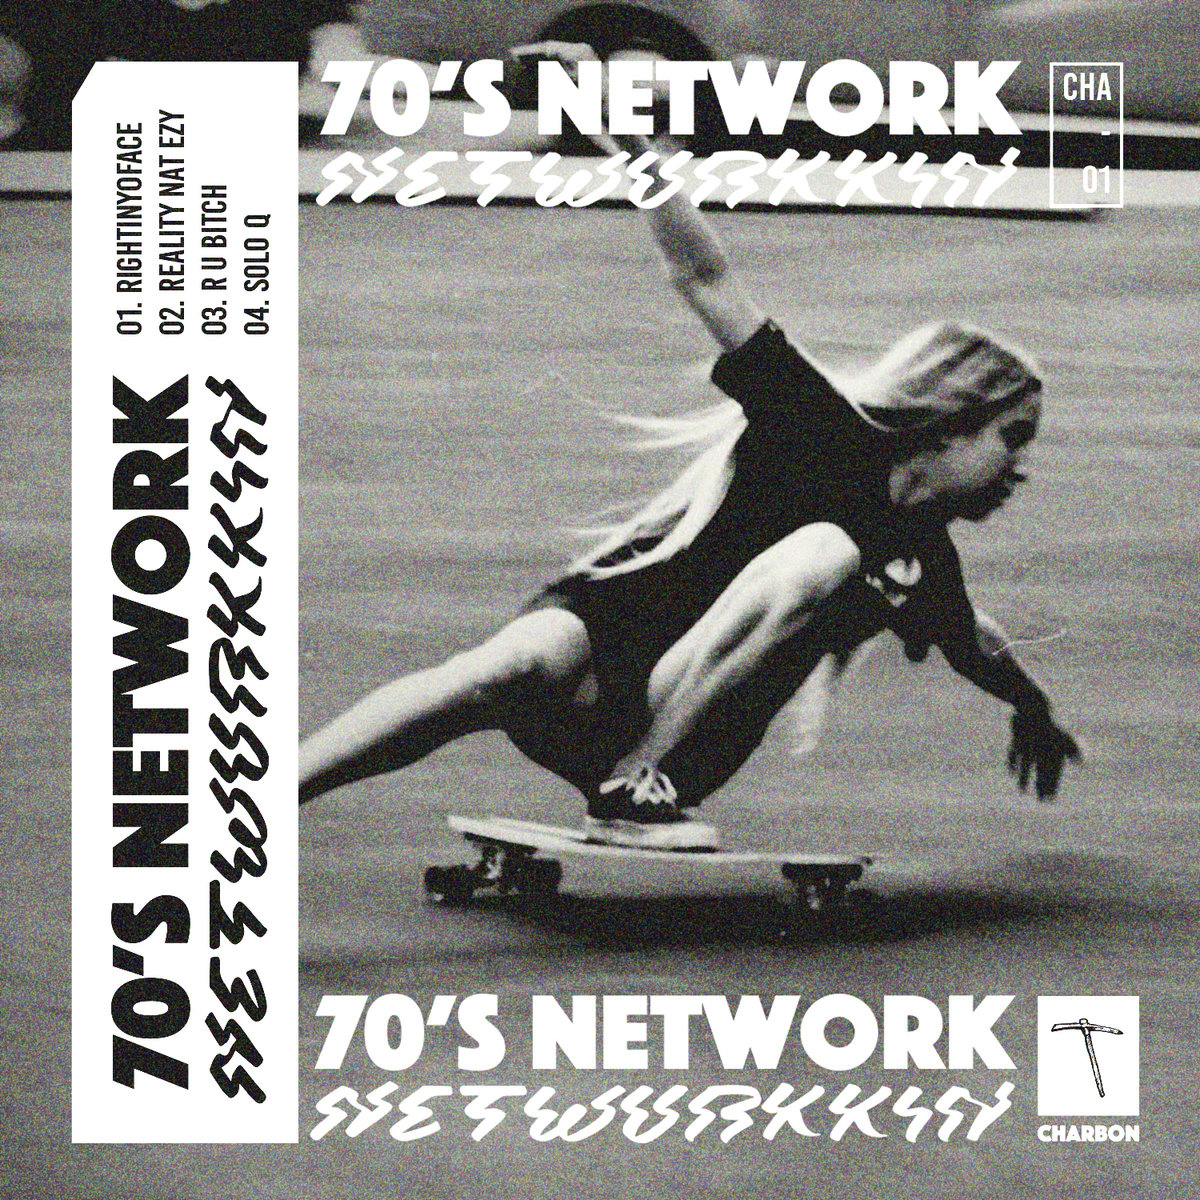 Download 70's Network - Netwurkkin on Electrobuzz